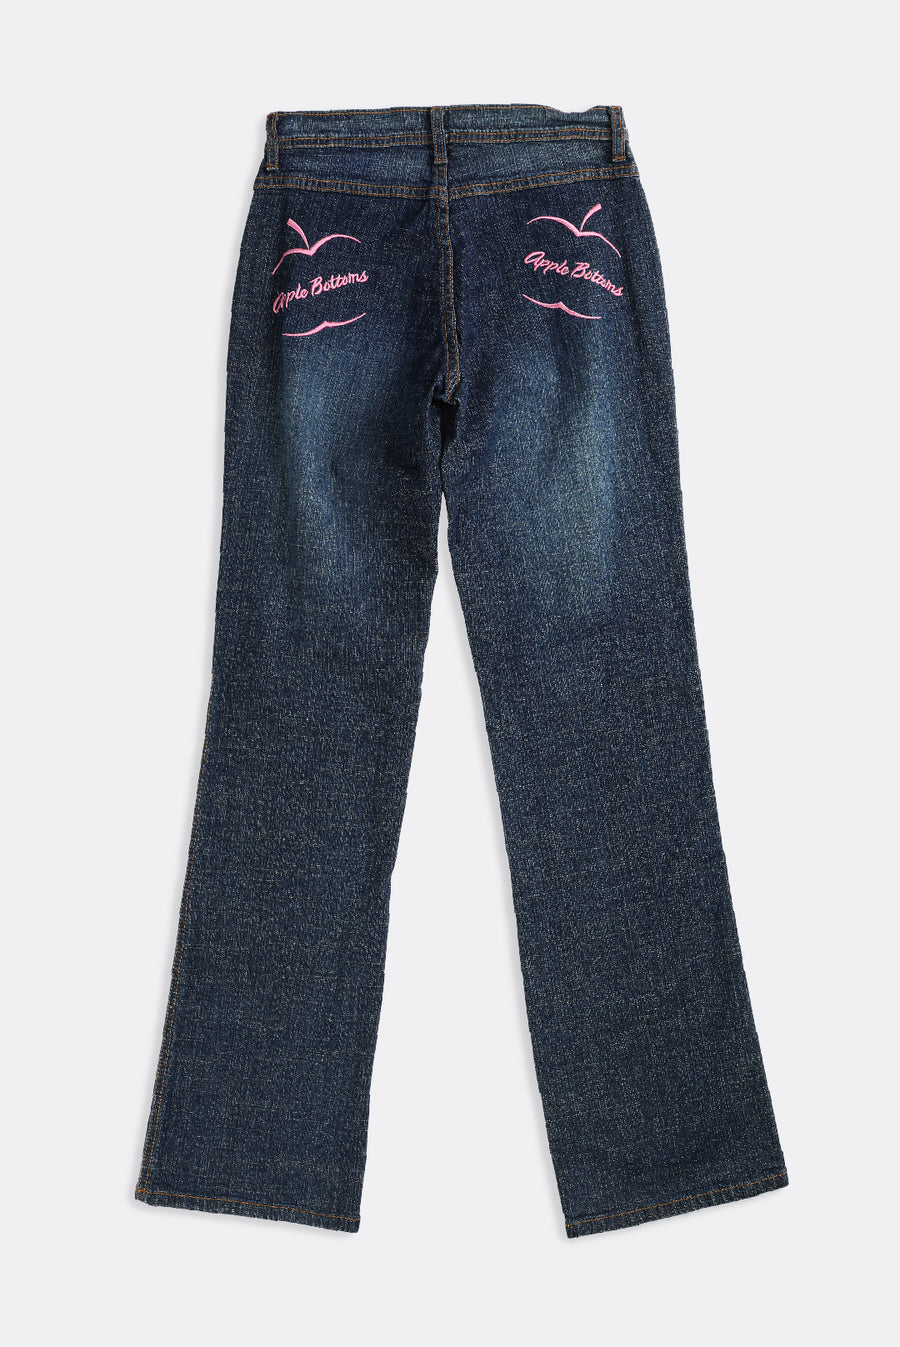 Deadstock Apple Bottom Pink Embroidered Denim Pants - W26